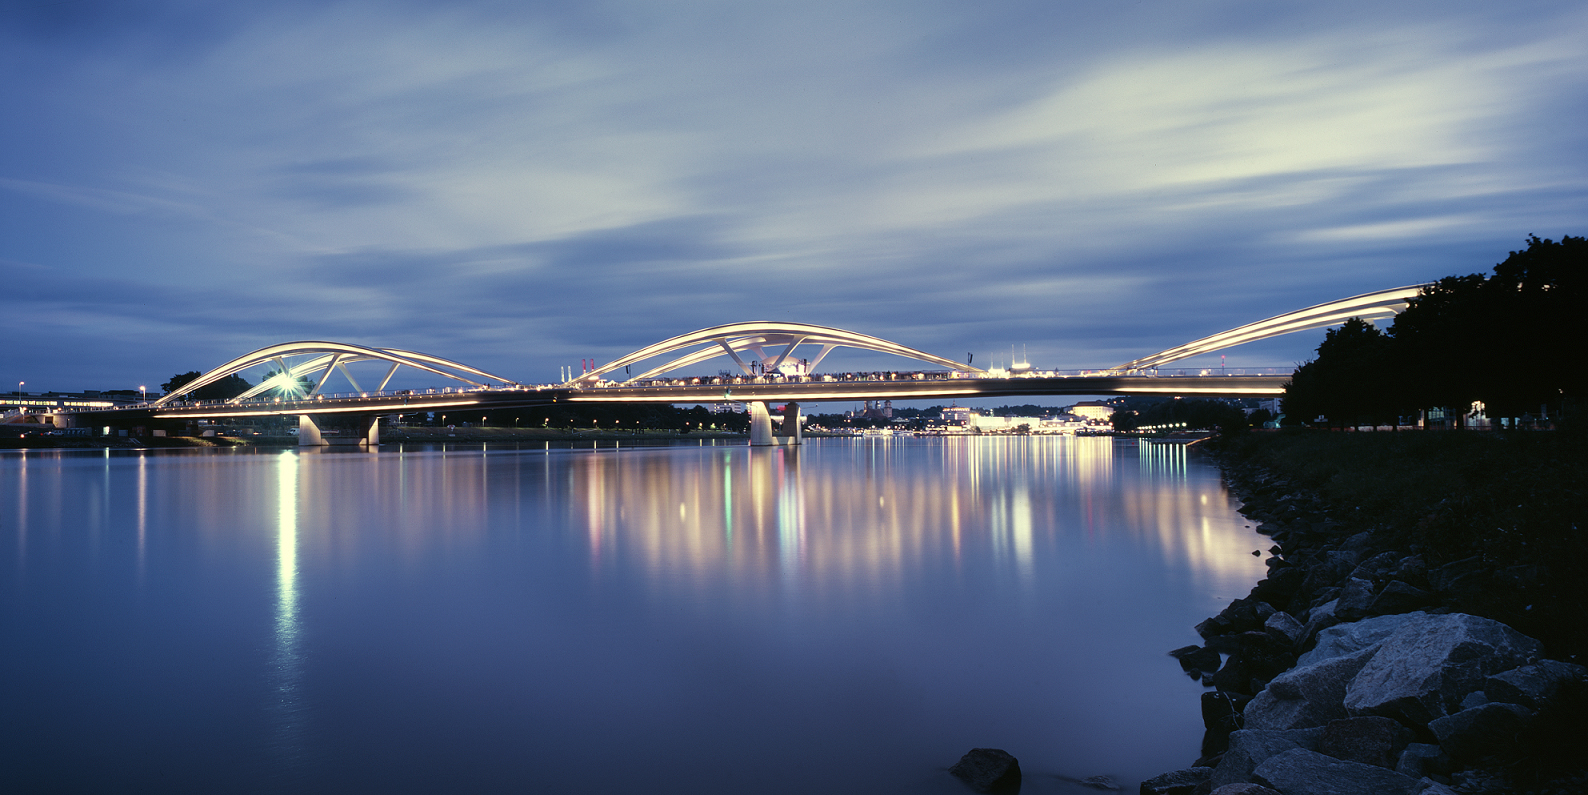 Marc Mimram - Pont de Linz - Linz Bridge - Autriche - Austria ©Erieta Attali copia